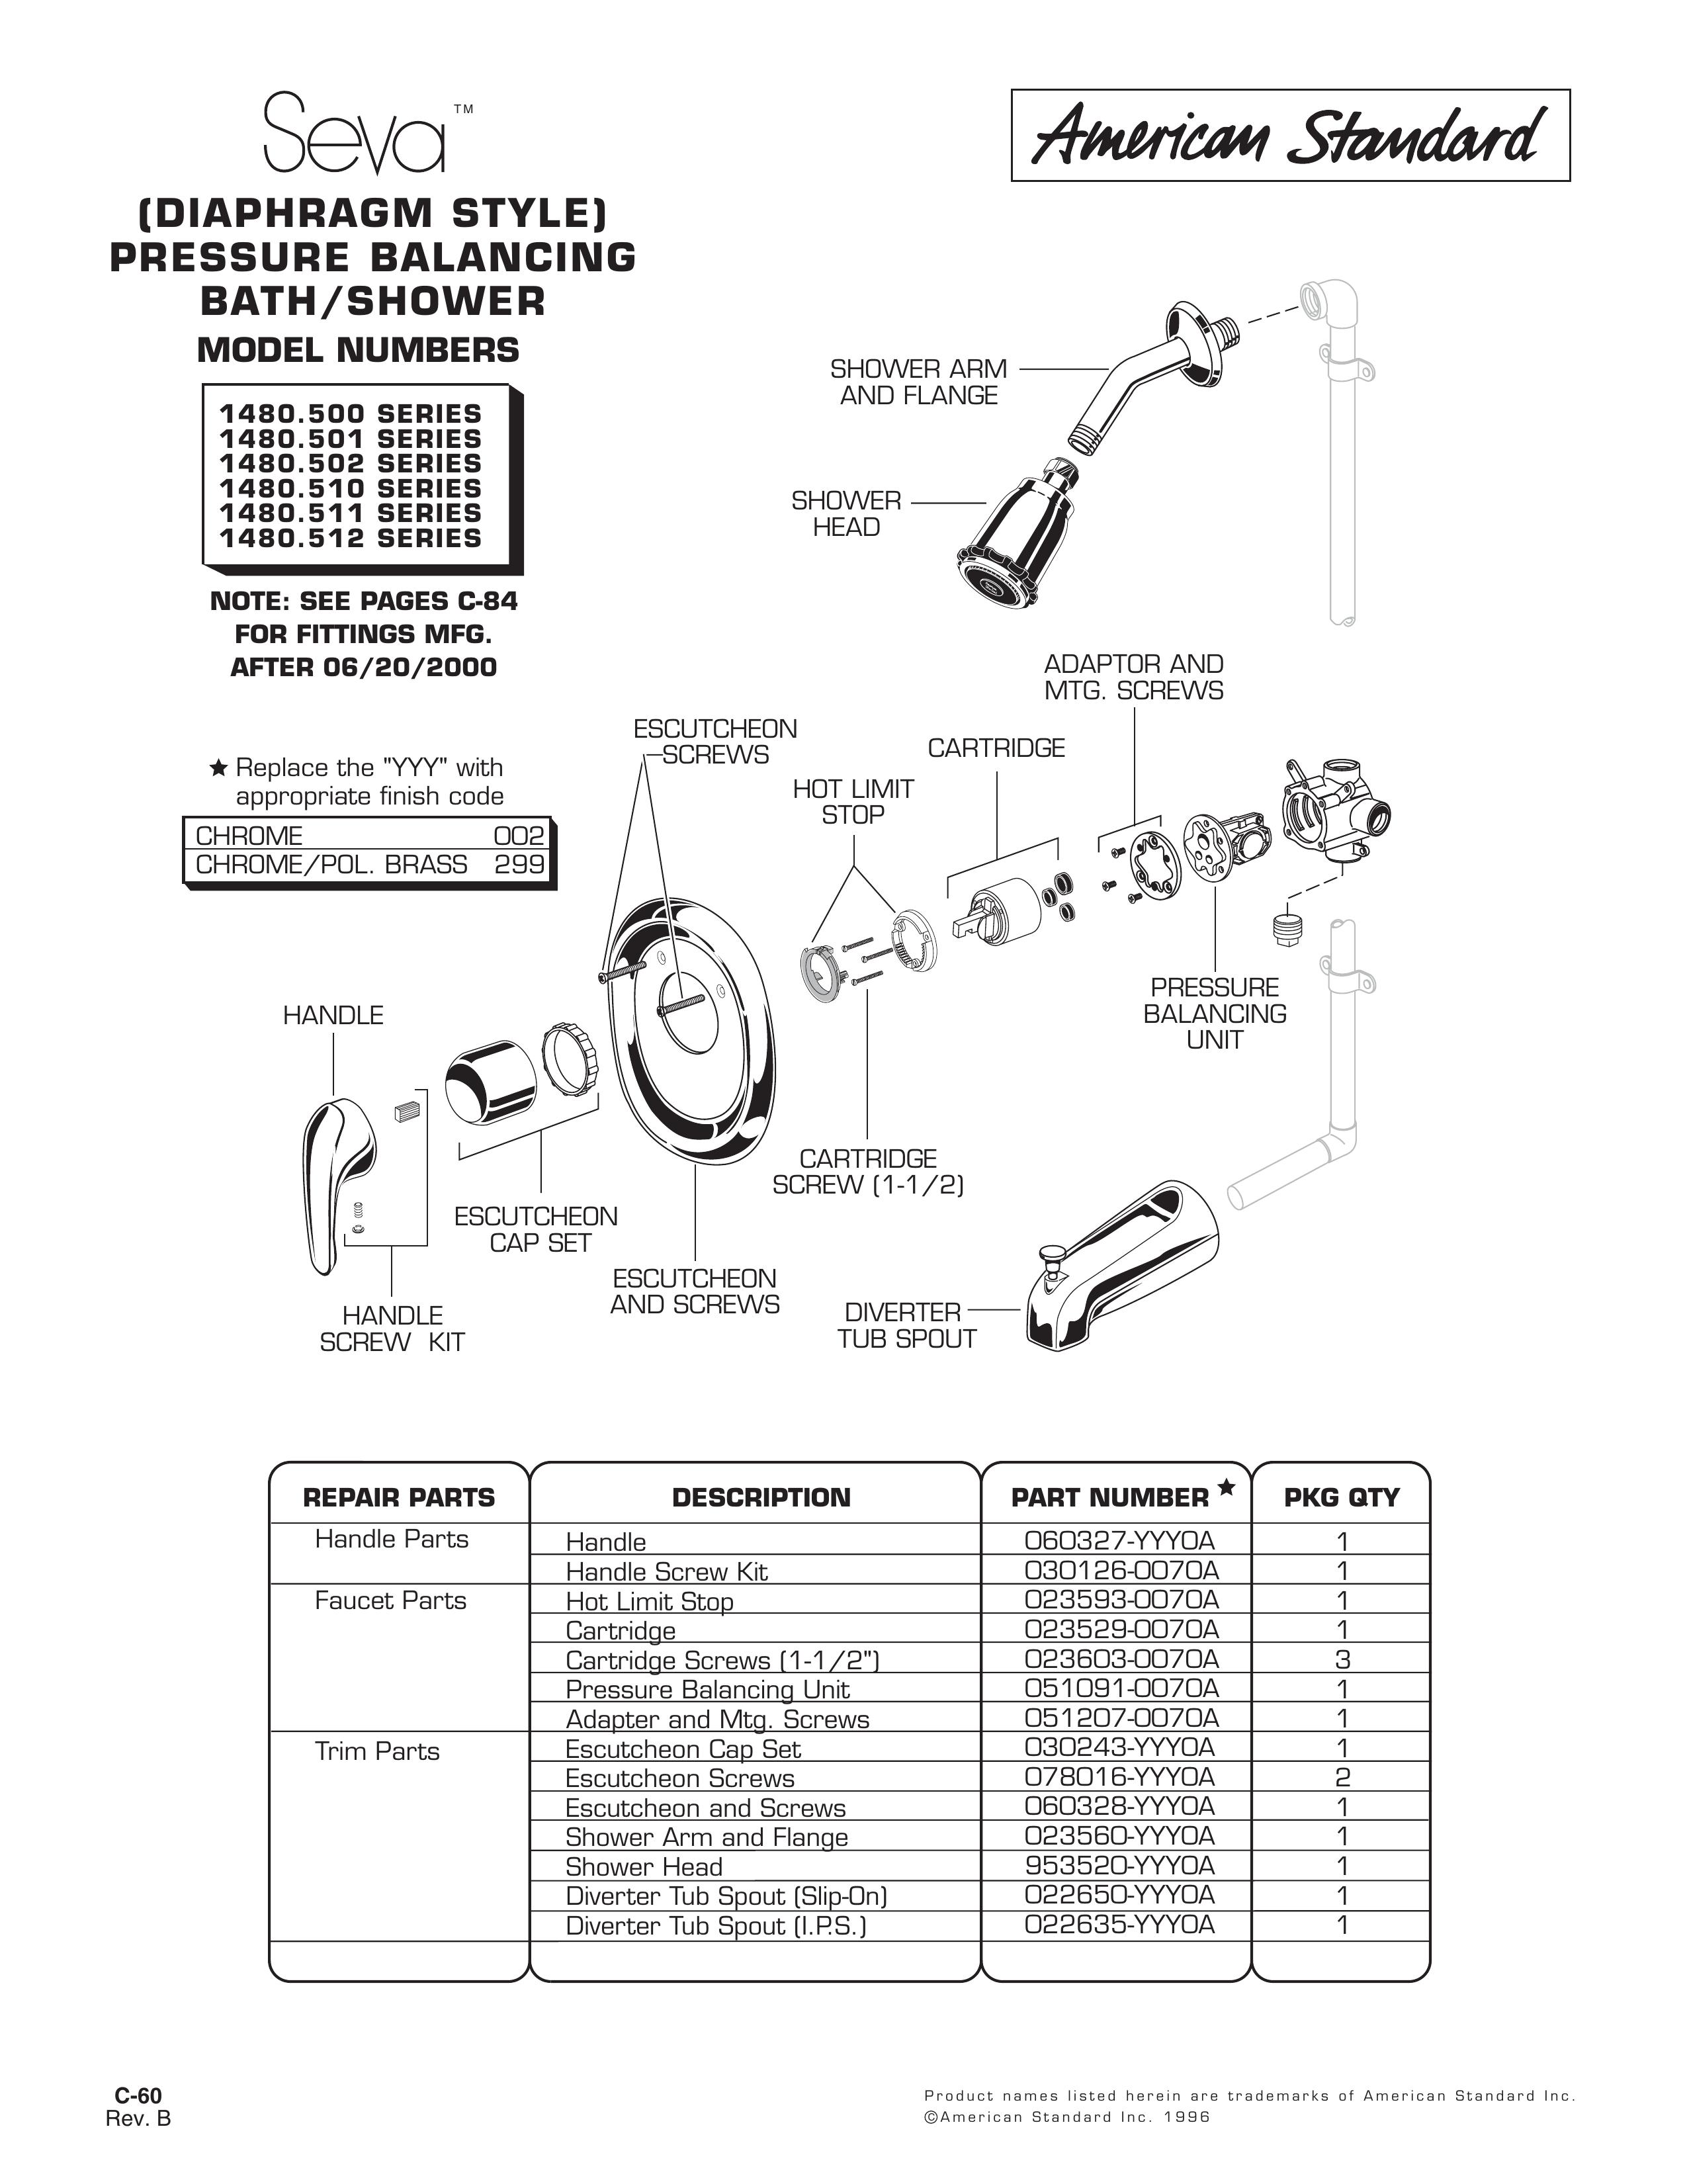 American Standard 1480.511 SERIES Outdoor Shower User Manual